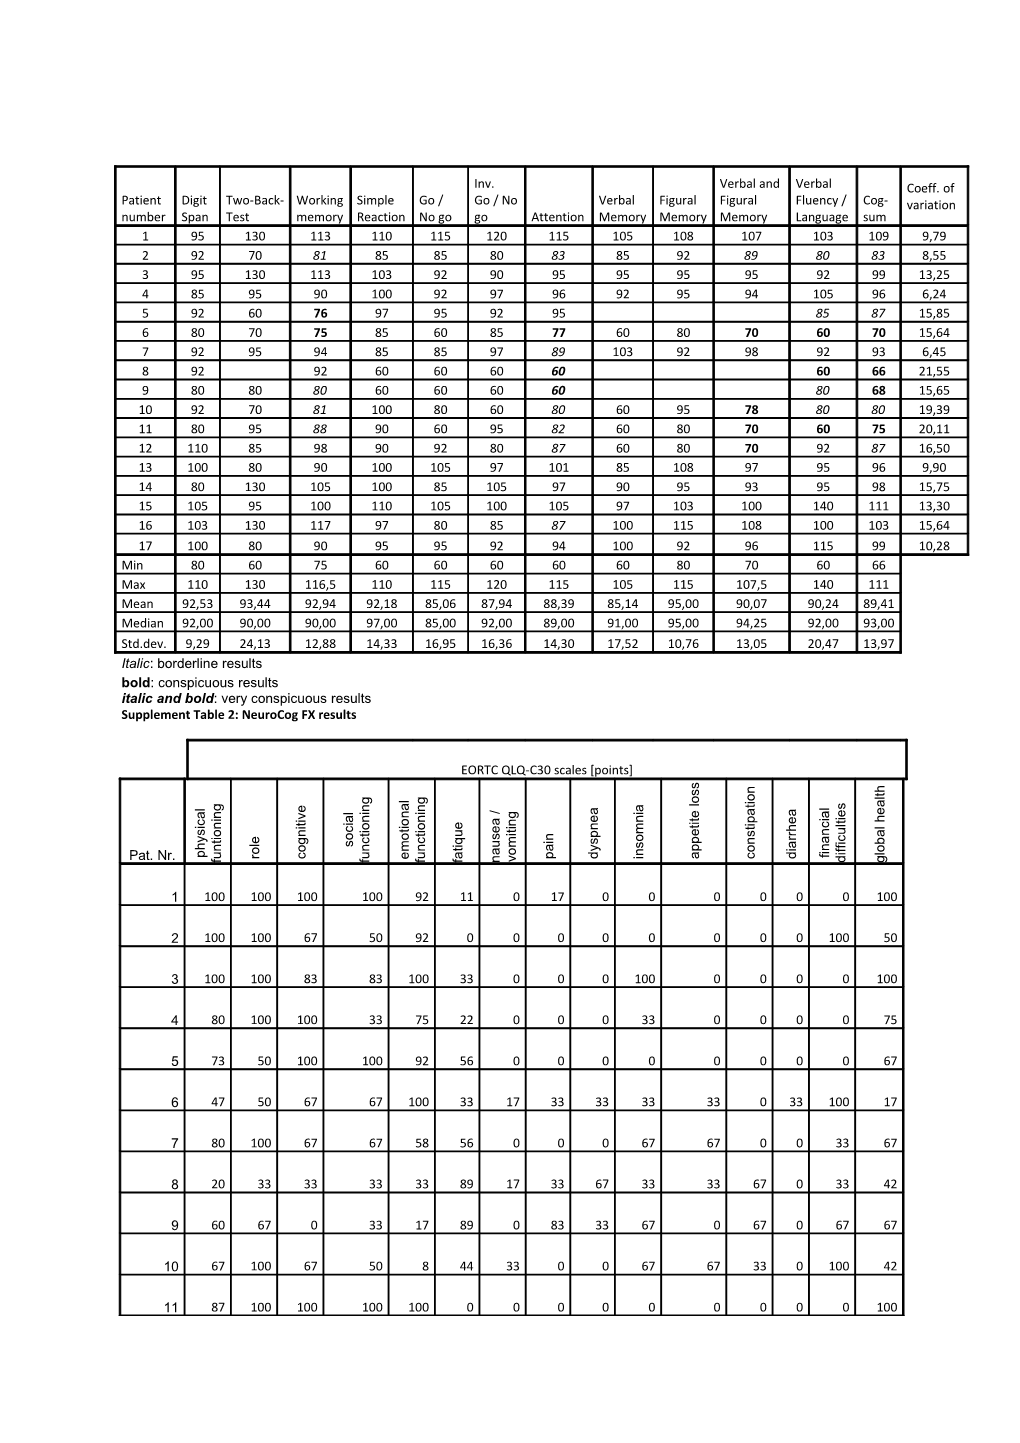 Supplement Table 3: EORTC QLQ-C30 Results